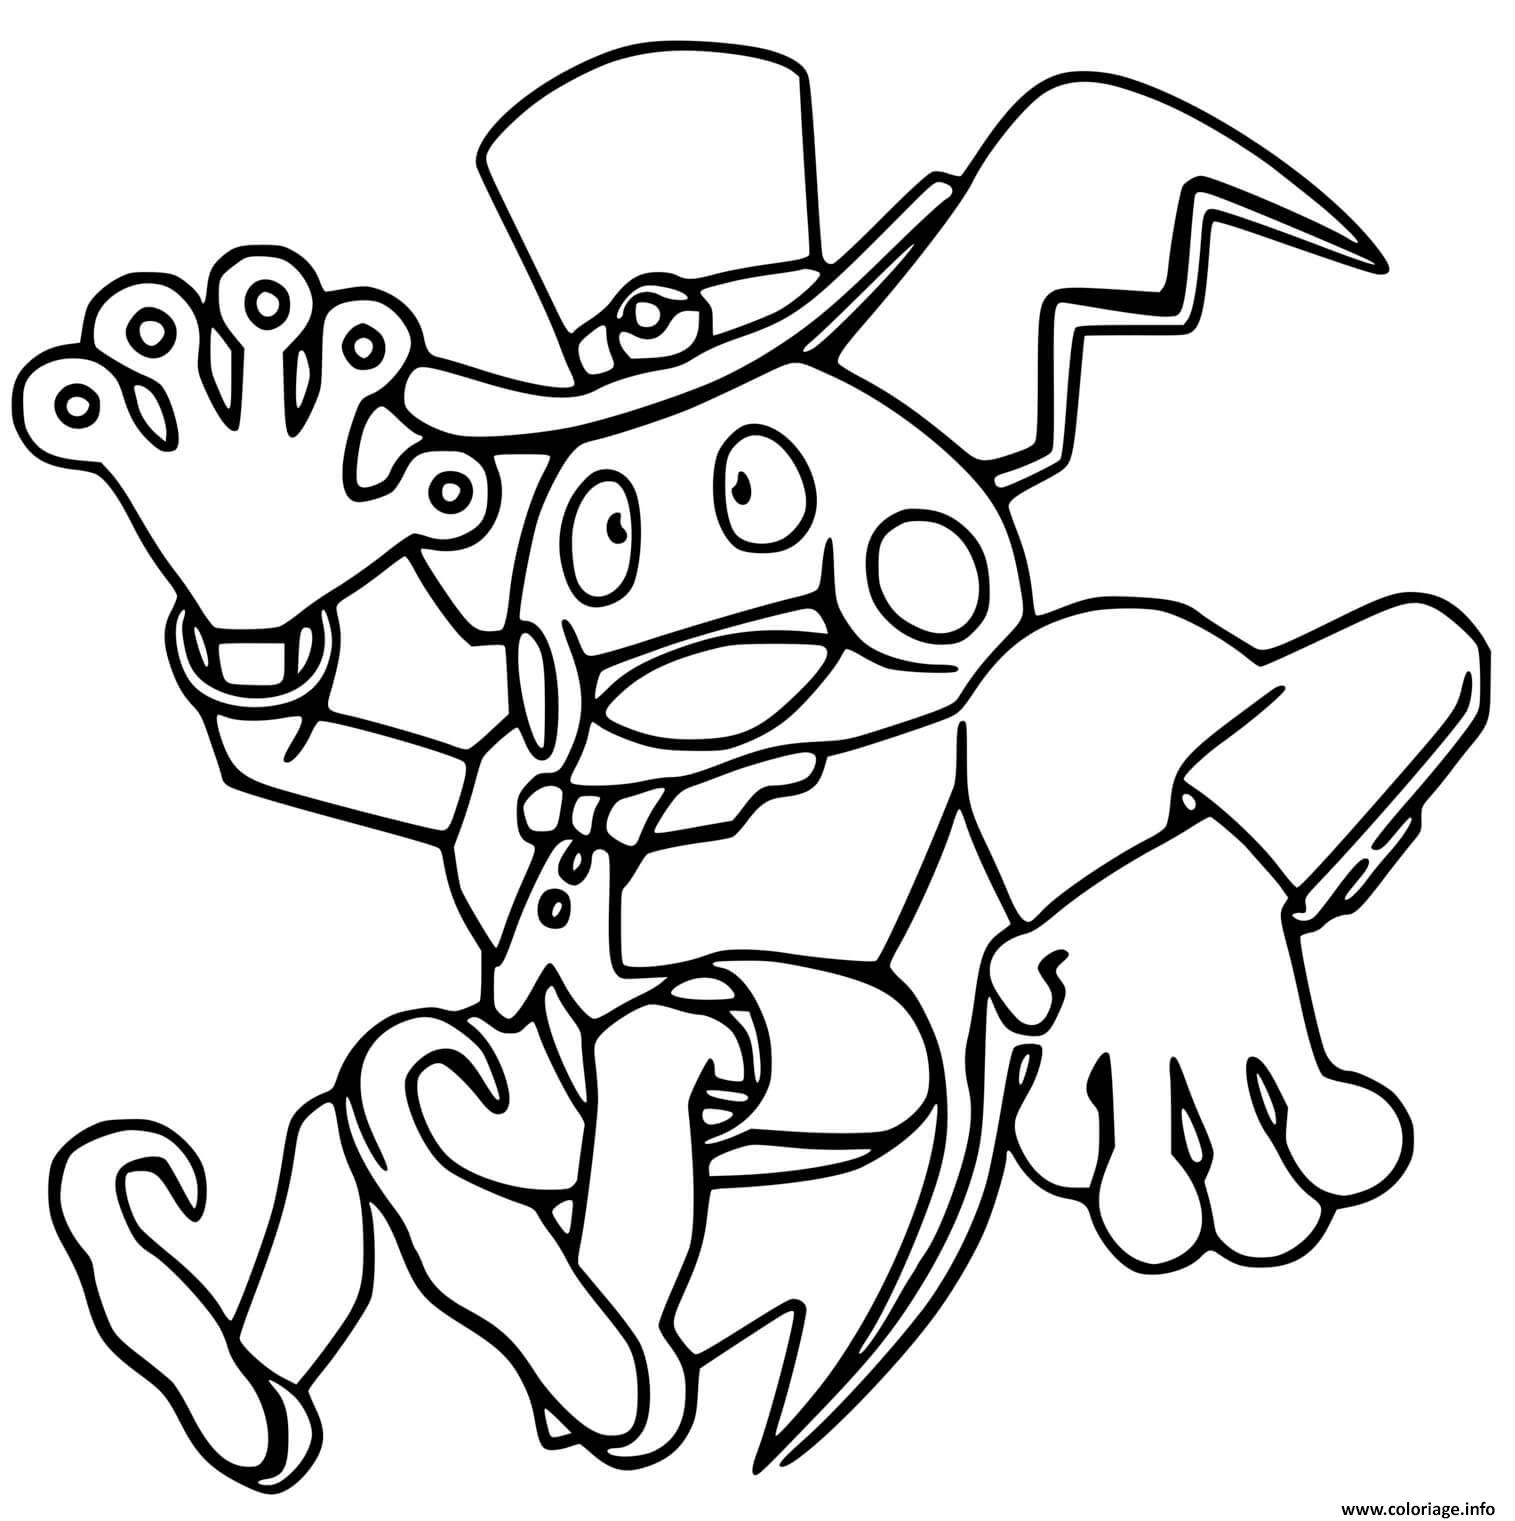 Coloriage Pokemon Unite Mr Mime Magicien Dessin à Imprimer